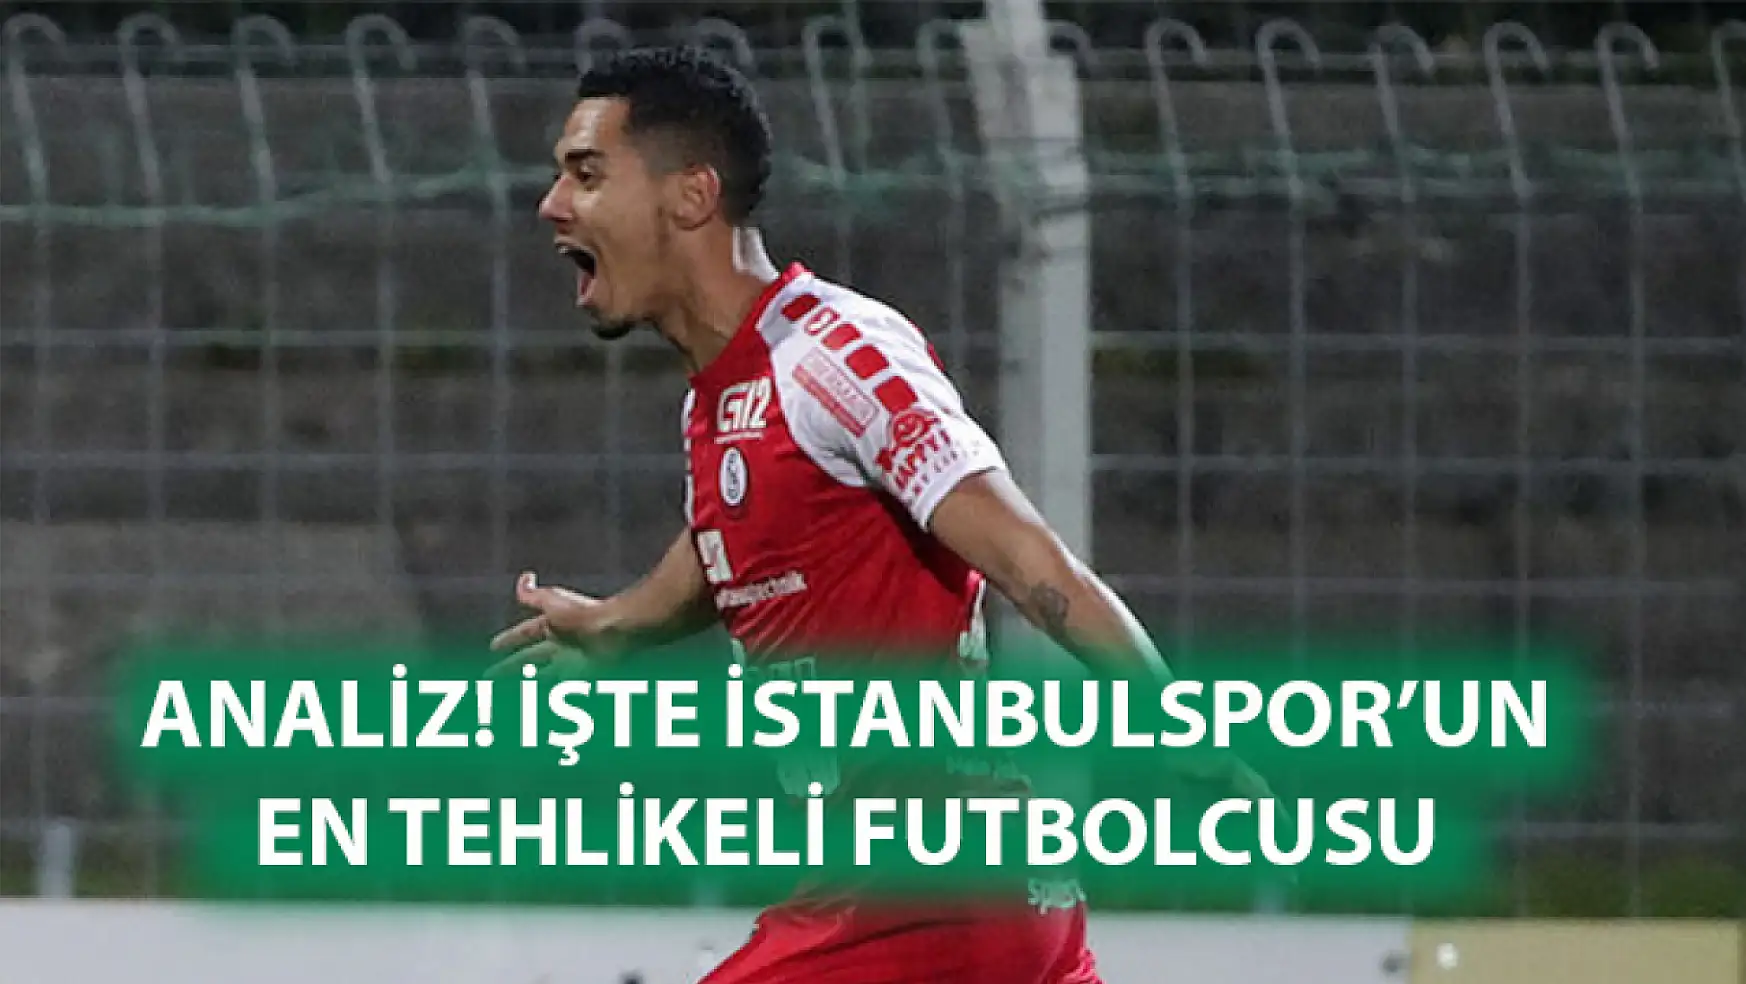 ANALİZ! İşte İstanbulspor'un en tehlikeli futbolcusu